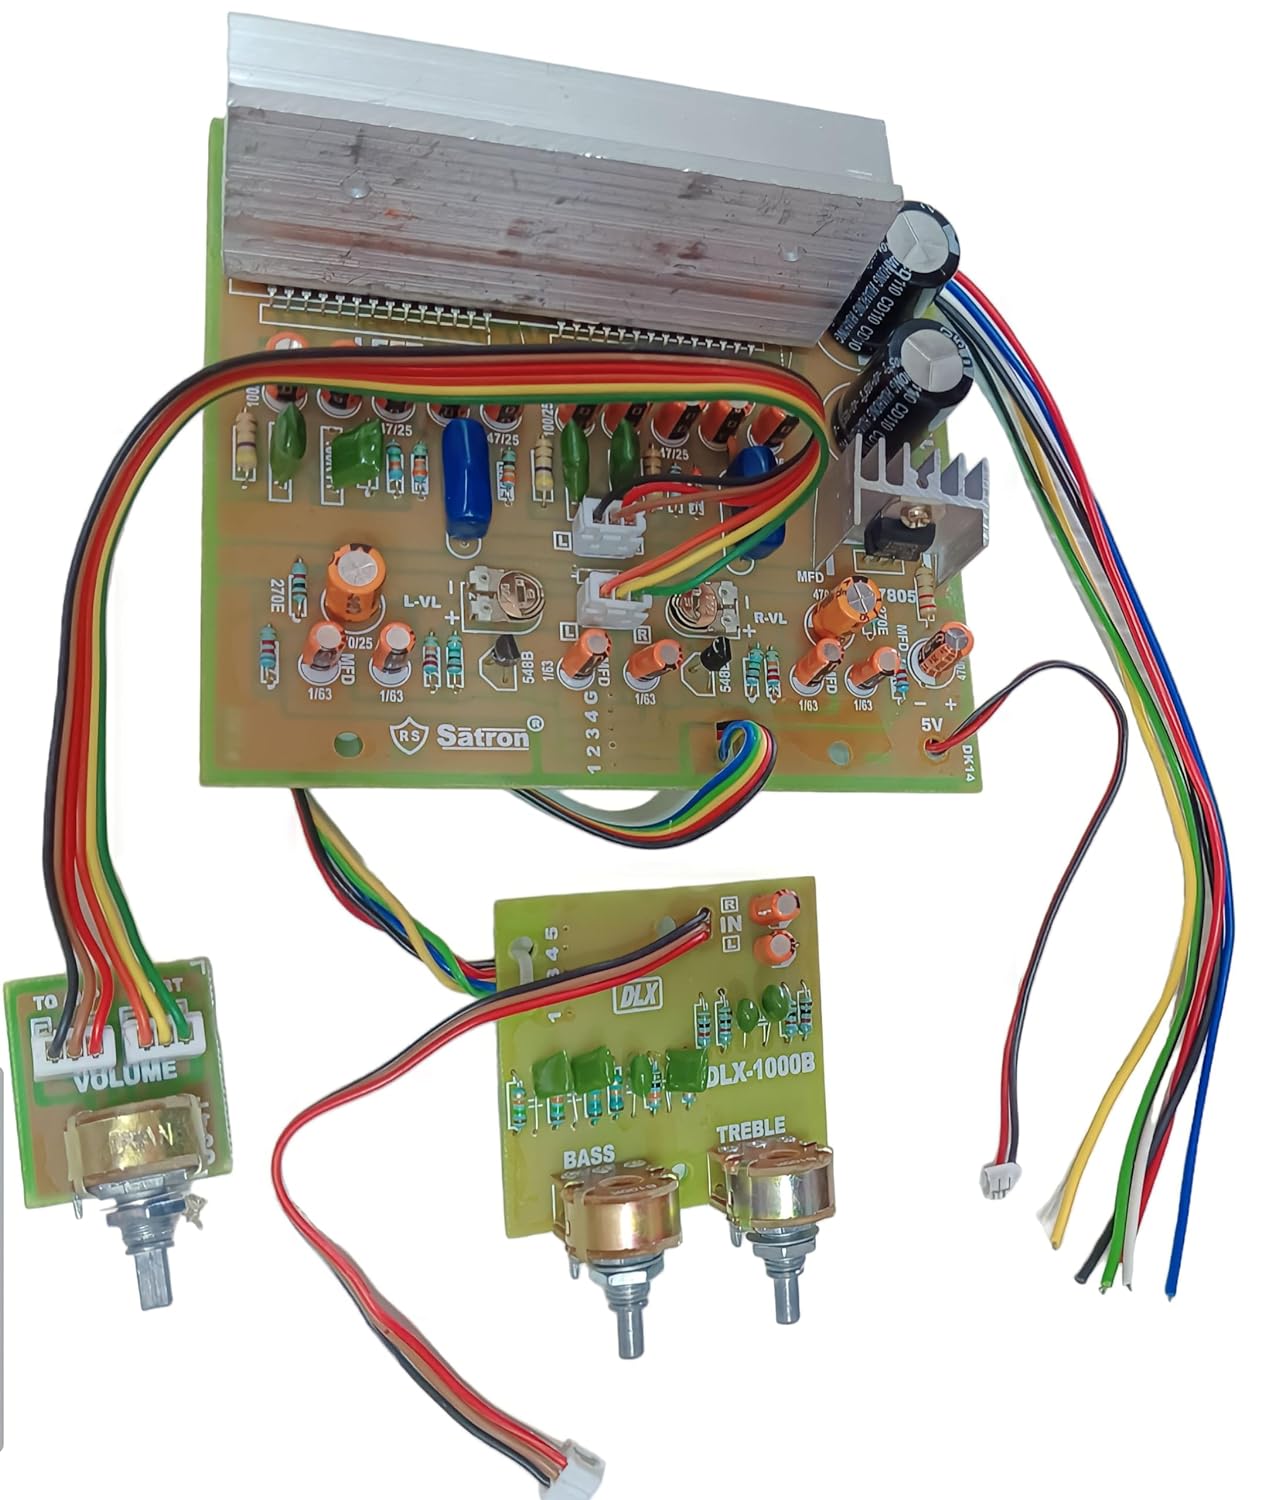 4440 IC 1600 Watt Car Amplifier Board with Bass Treble and Volume Kit